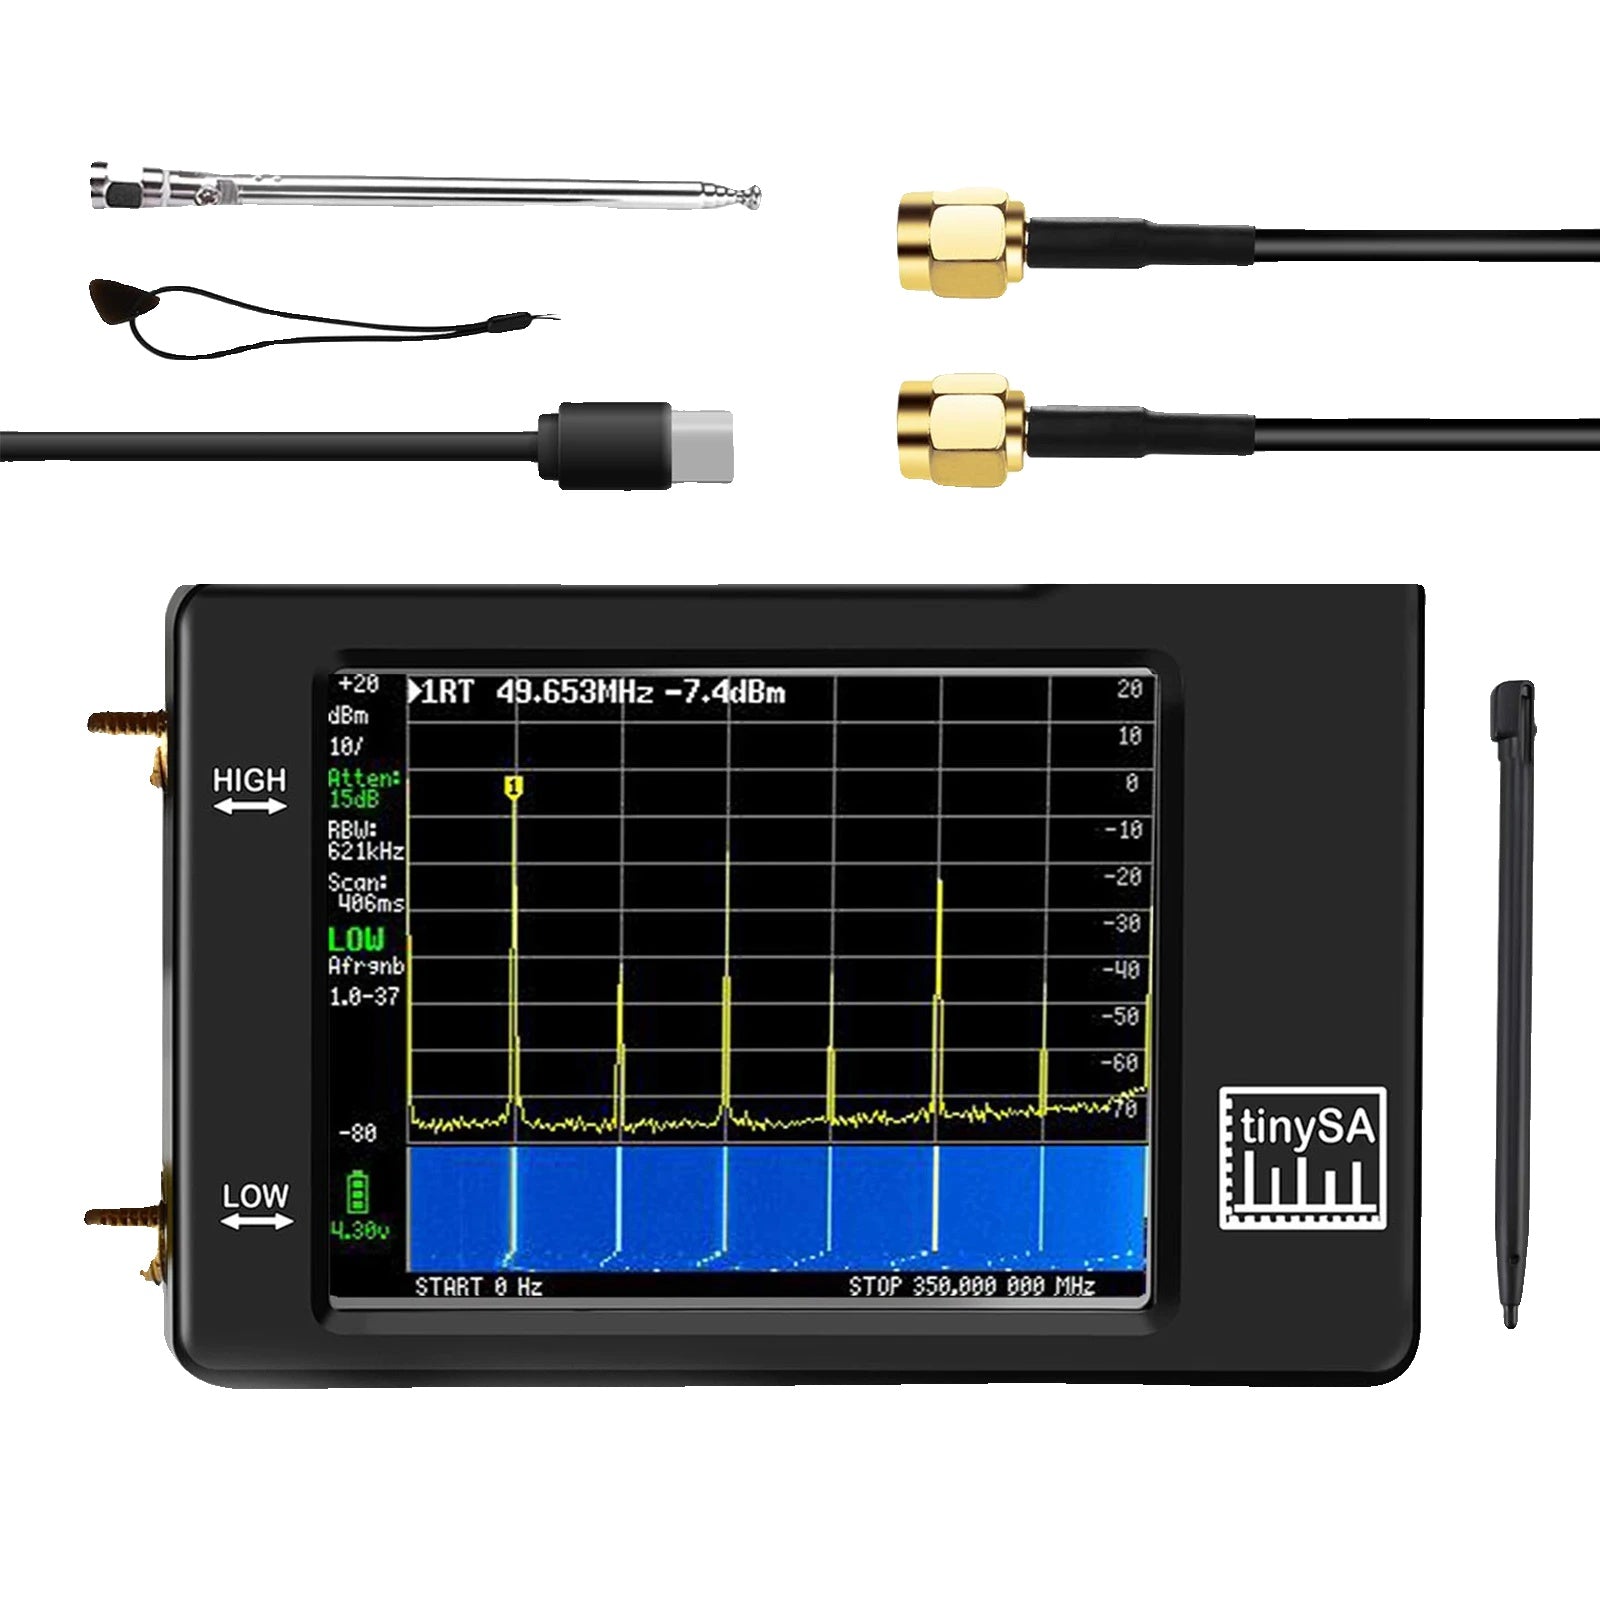 "Portabel spektrumanalysator, kompakt design, bred frekvensomfång"